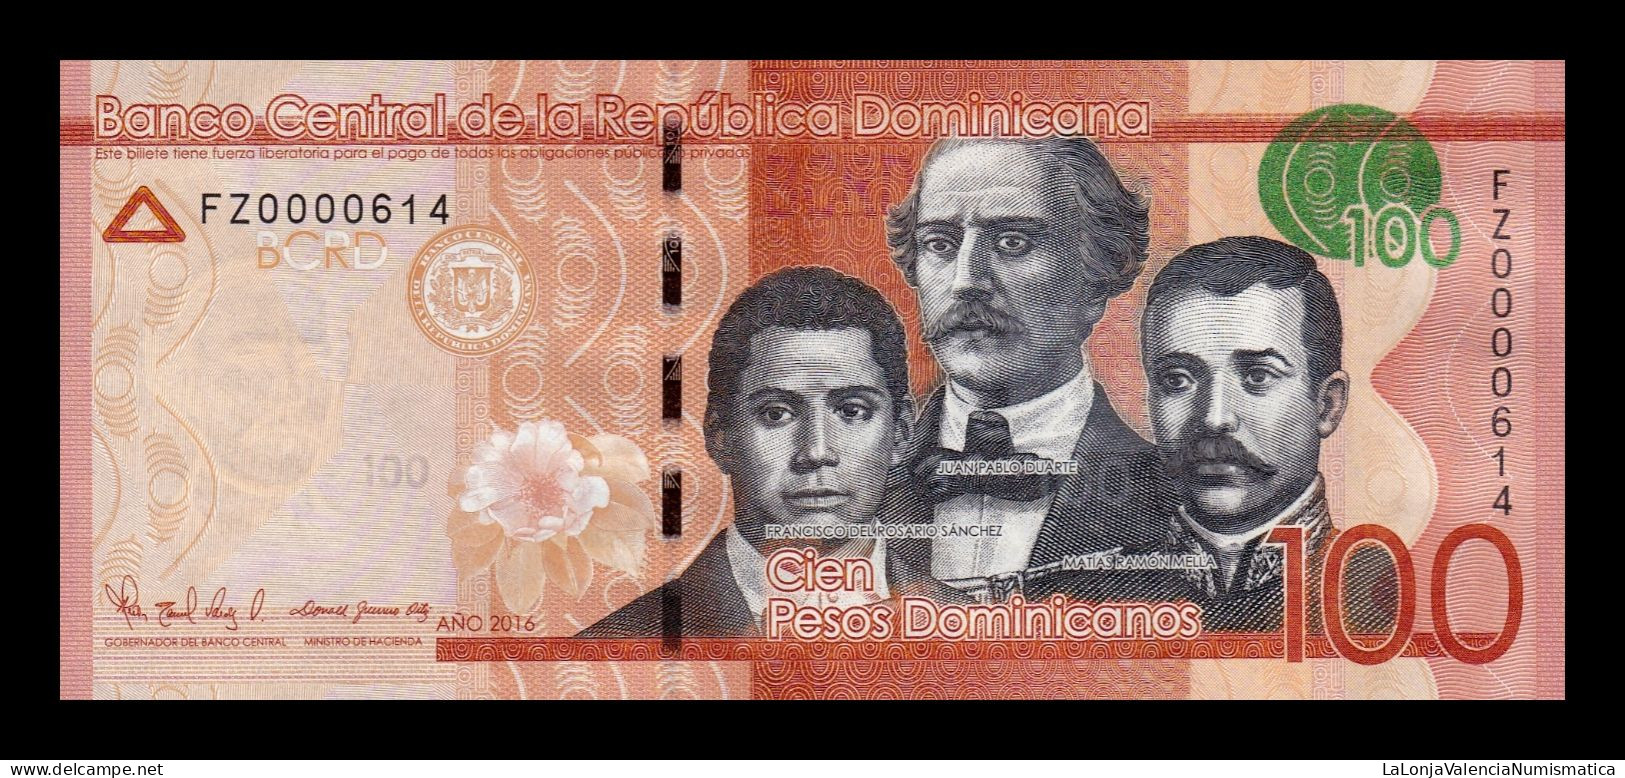 República Dominicana 100 Pesos Dominicanos 2016 Pick 190c Low Serial 614 Sc Unc - República Dominicana